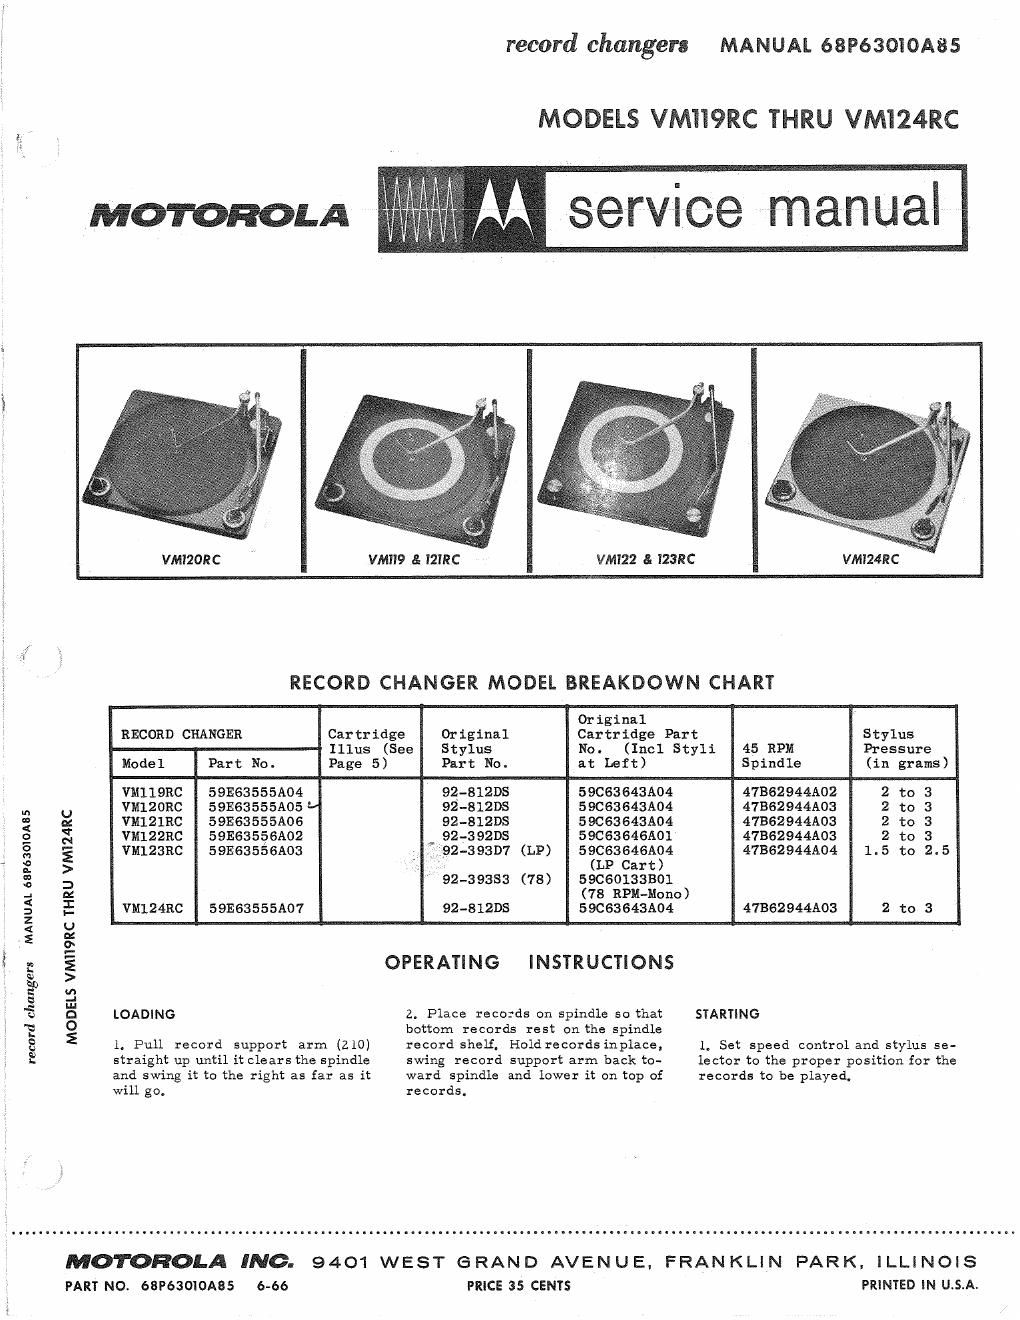 motorola vm 122 rc service manual